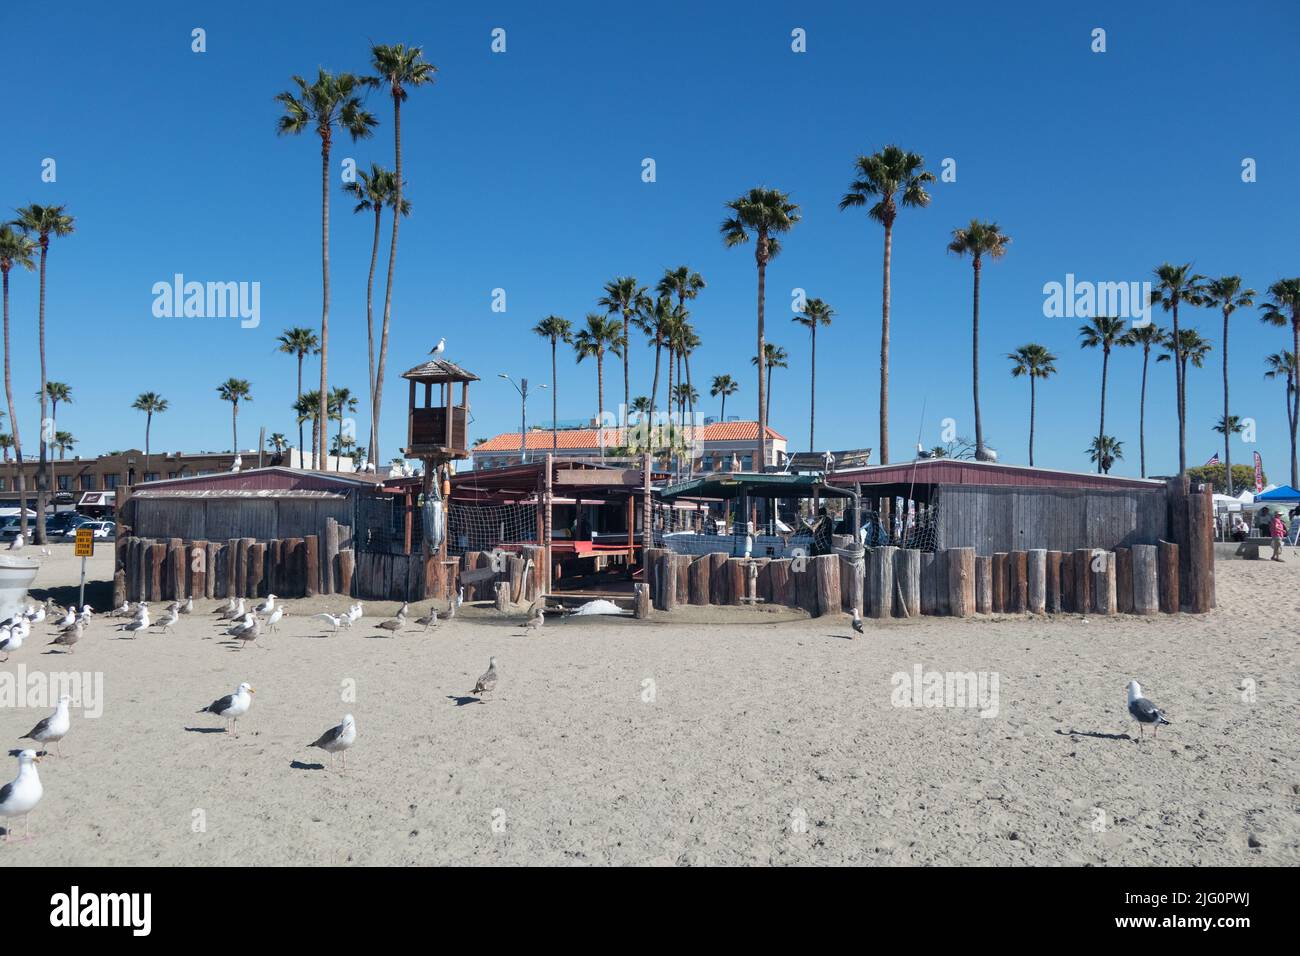 The beach side of the historic dory fishing market on the Balboa Peninsula Newport Beach, CA USA Stock Photo